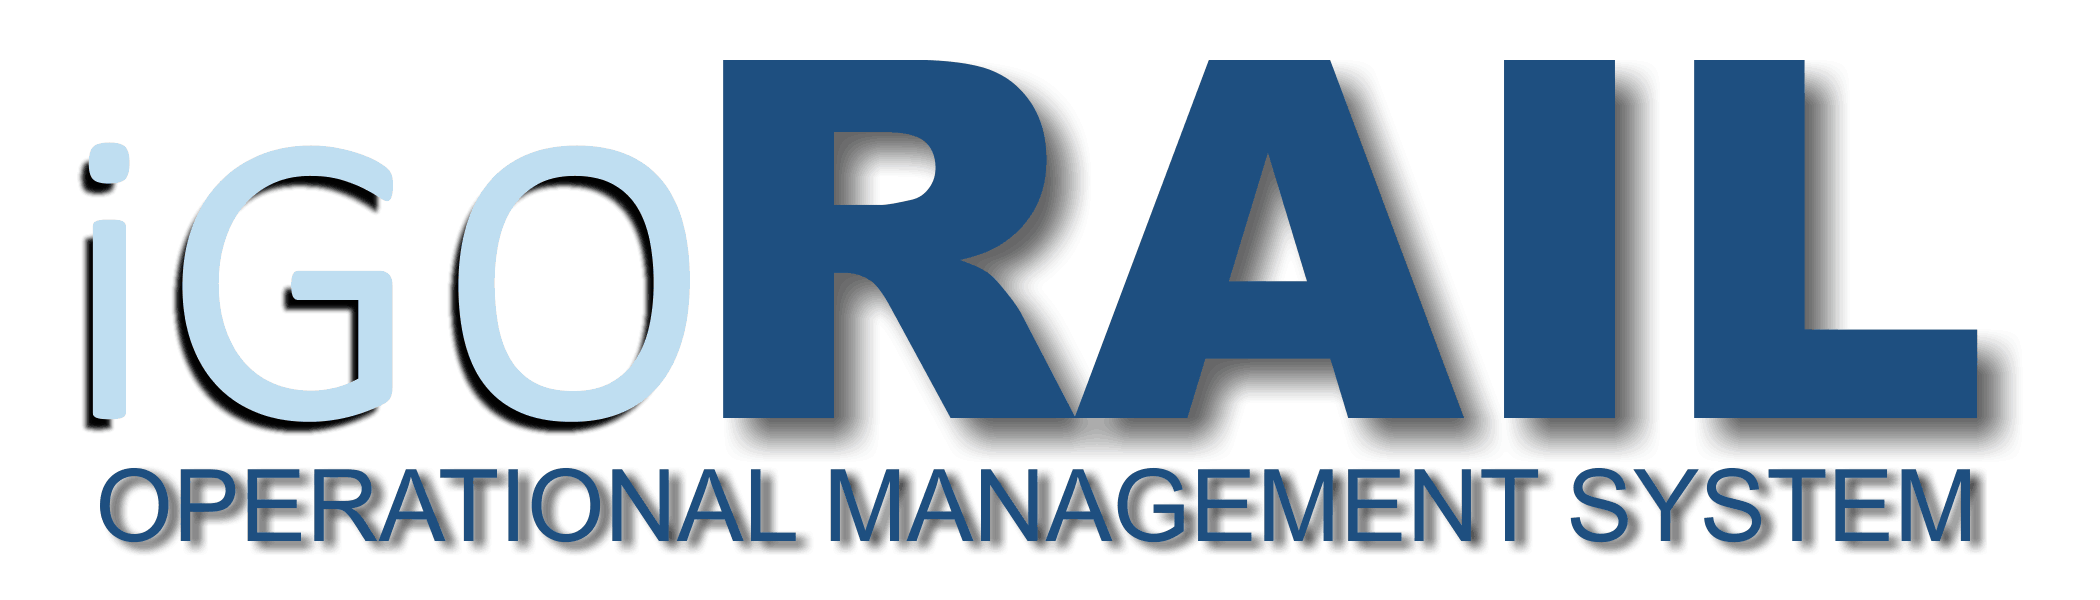 iGoRail enterprise management computer system